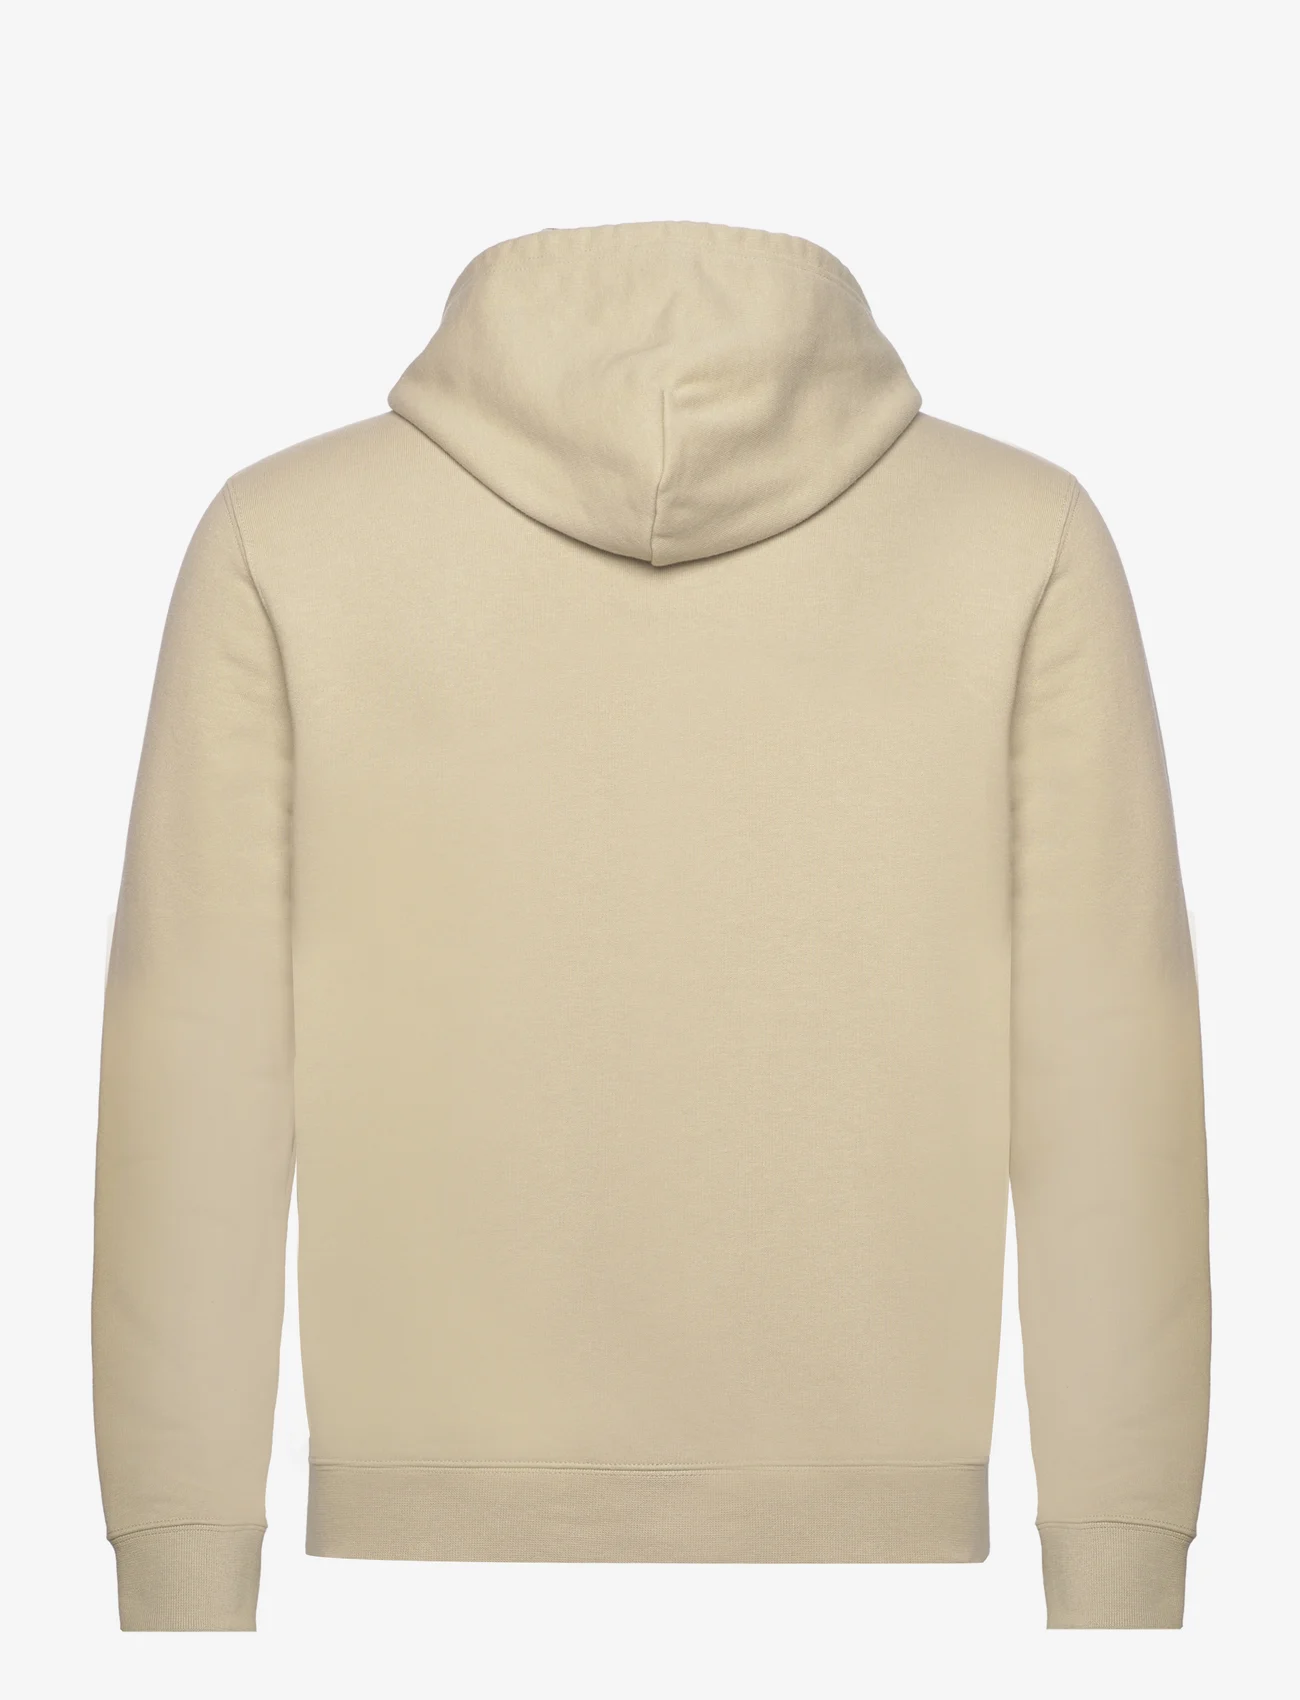 Champion - Hooded Sweatshirt - huvtröjor - twill - 1